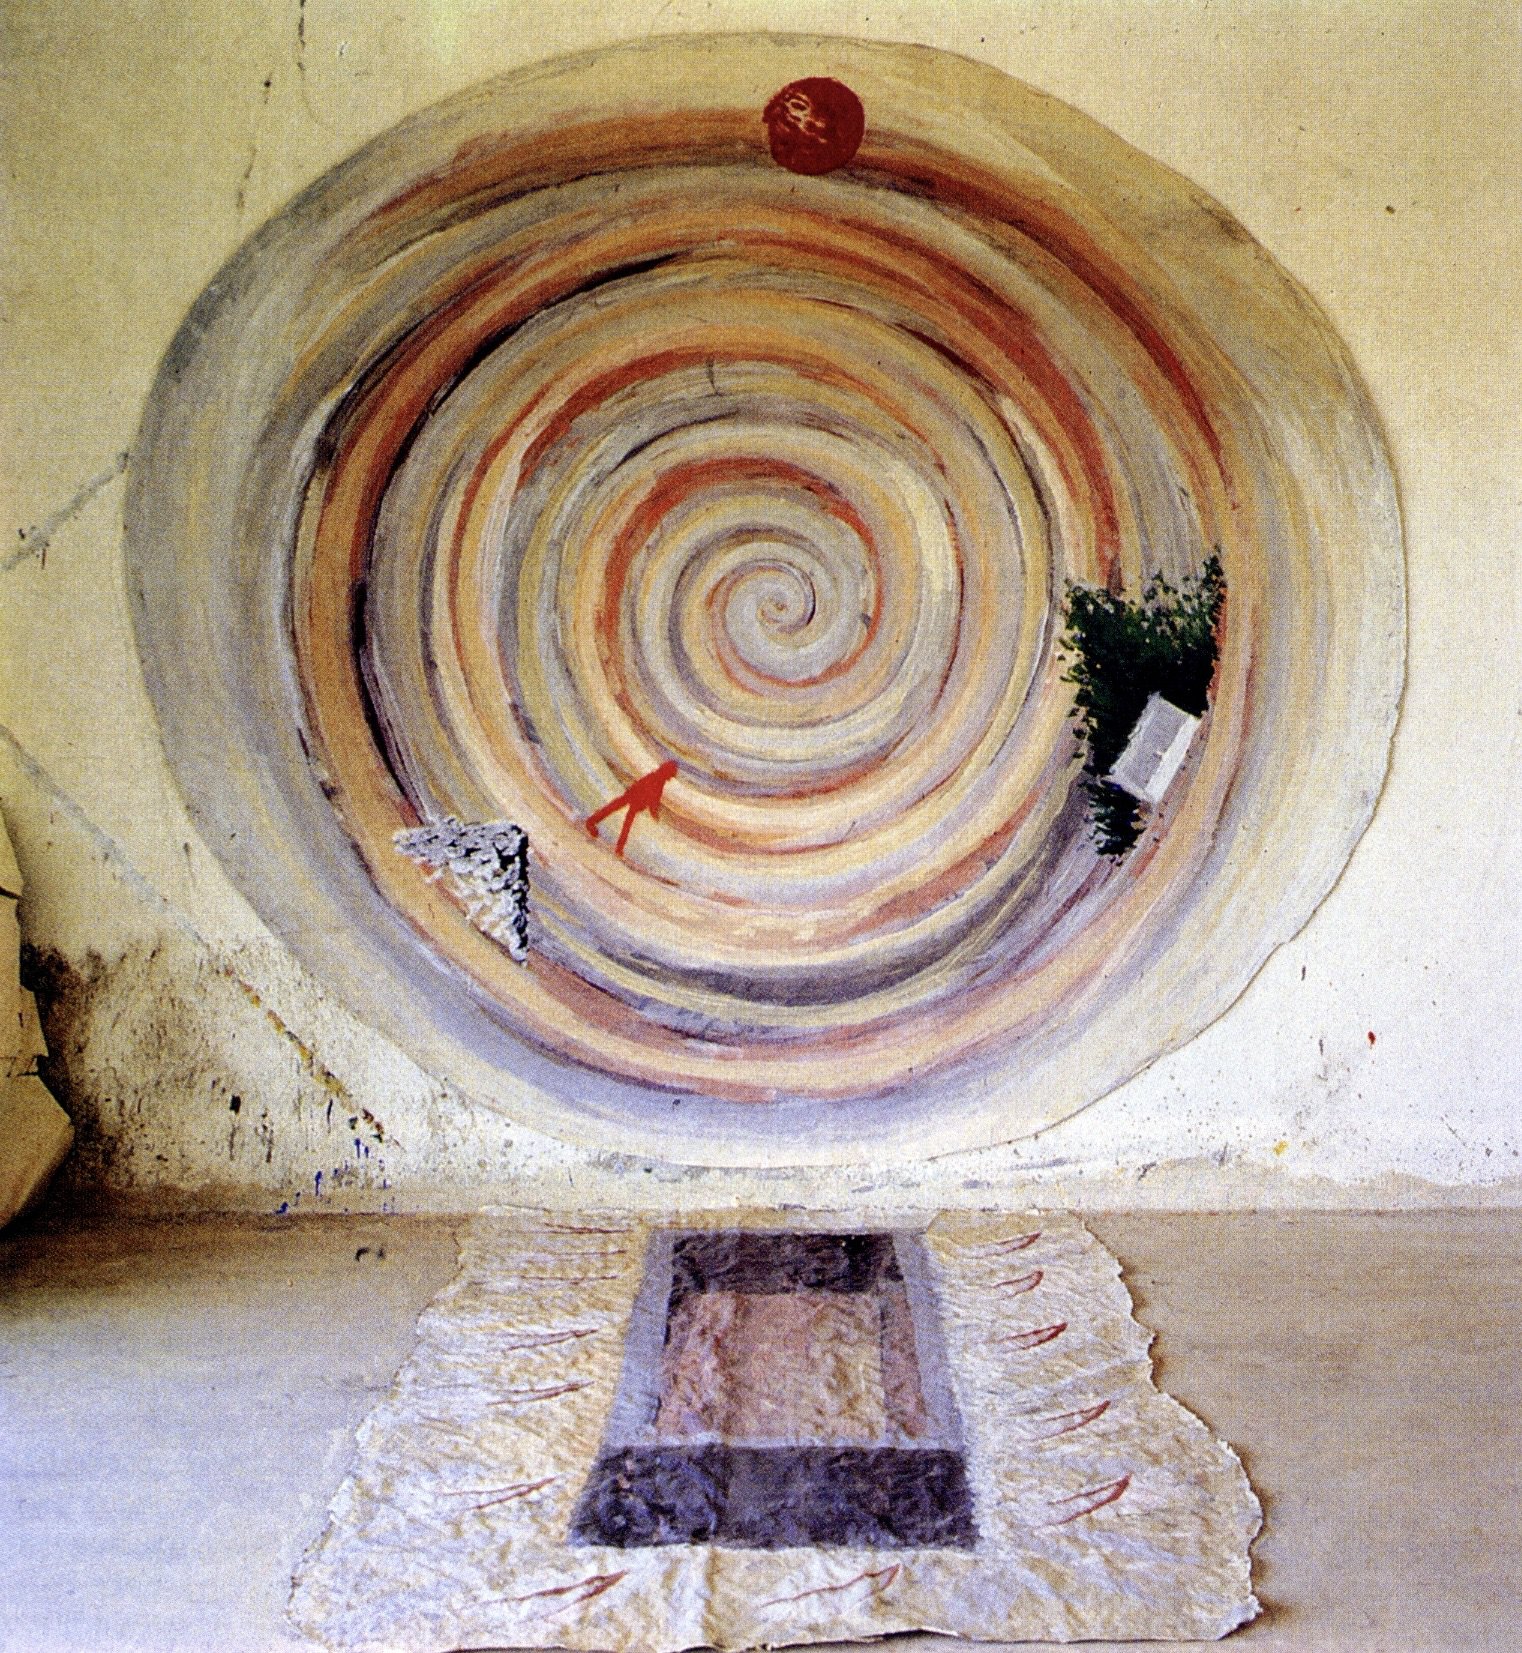 Thanasis Totsikas, Untitled, mixed media, 460 x 300 x 170 cm (181 1/8 x 118 1/8 x 66 7/8 in), 1986. Installation view, Utopia Versus Reality, 19a Bienal de São Paulo, São Paulo, 1987